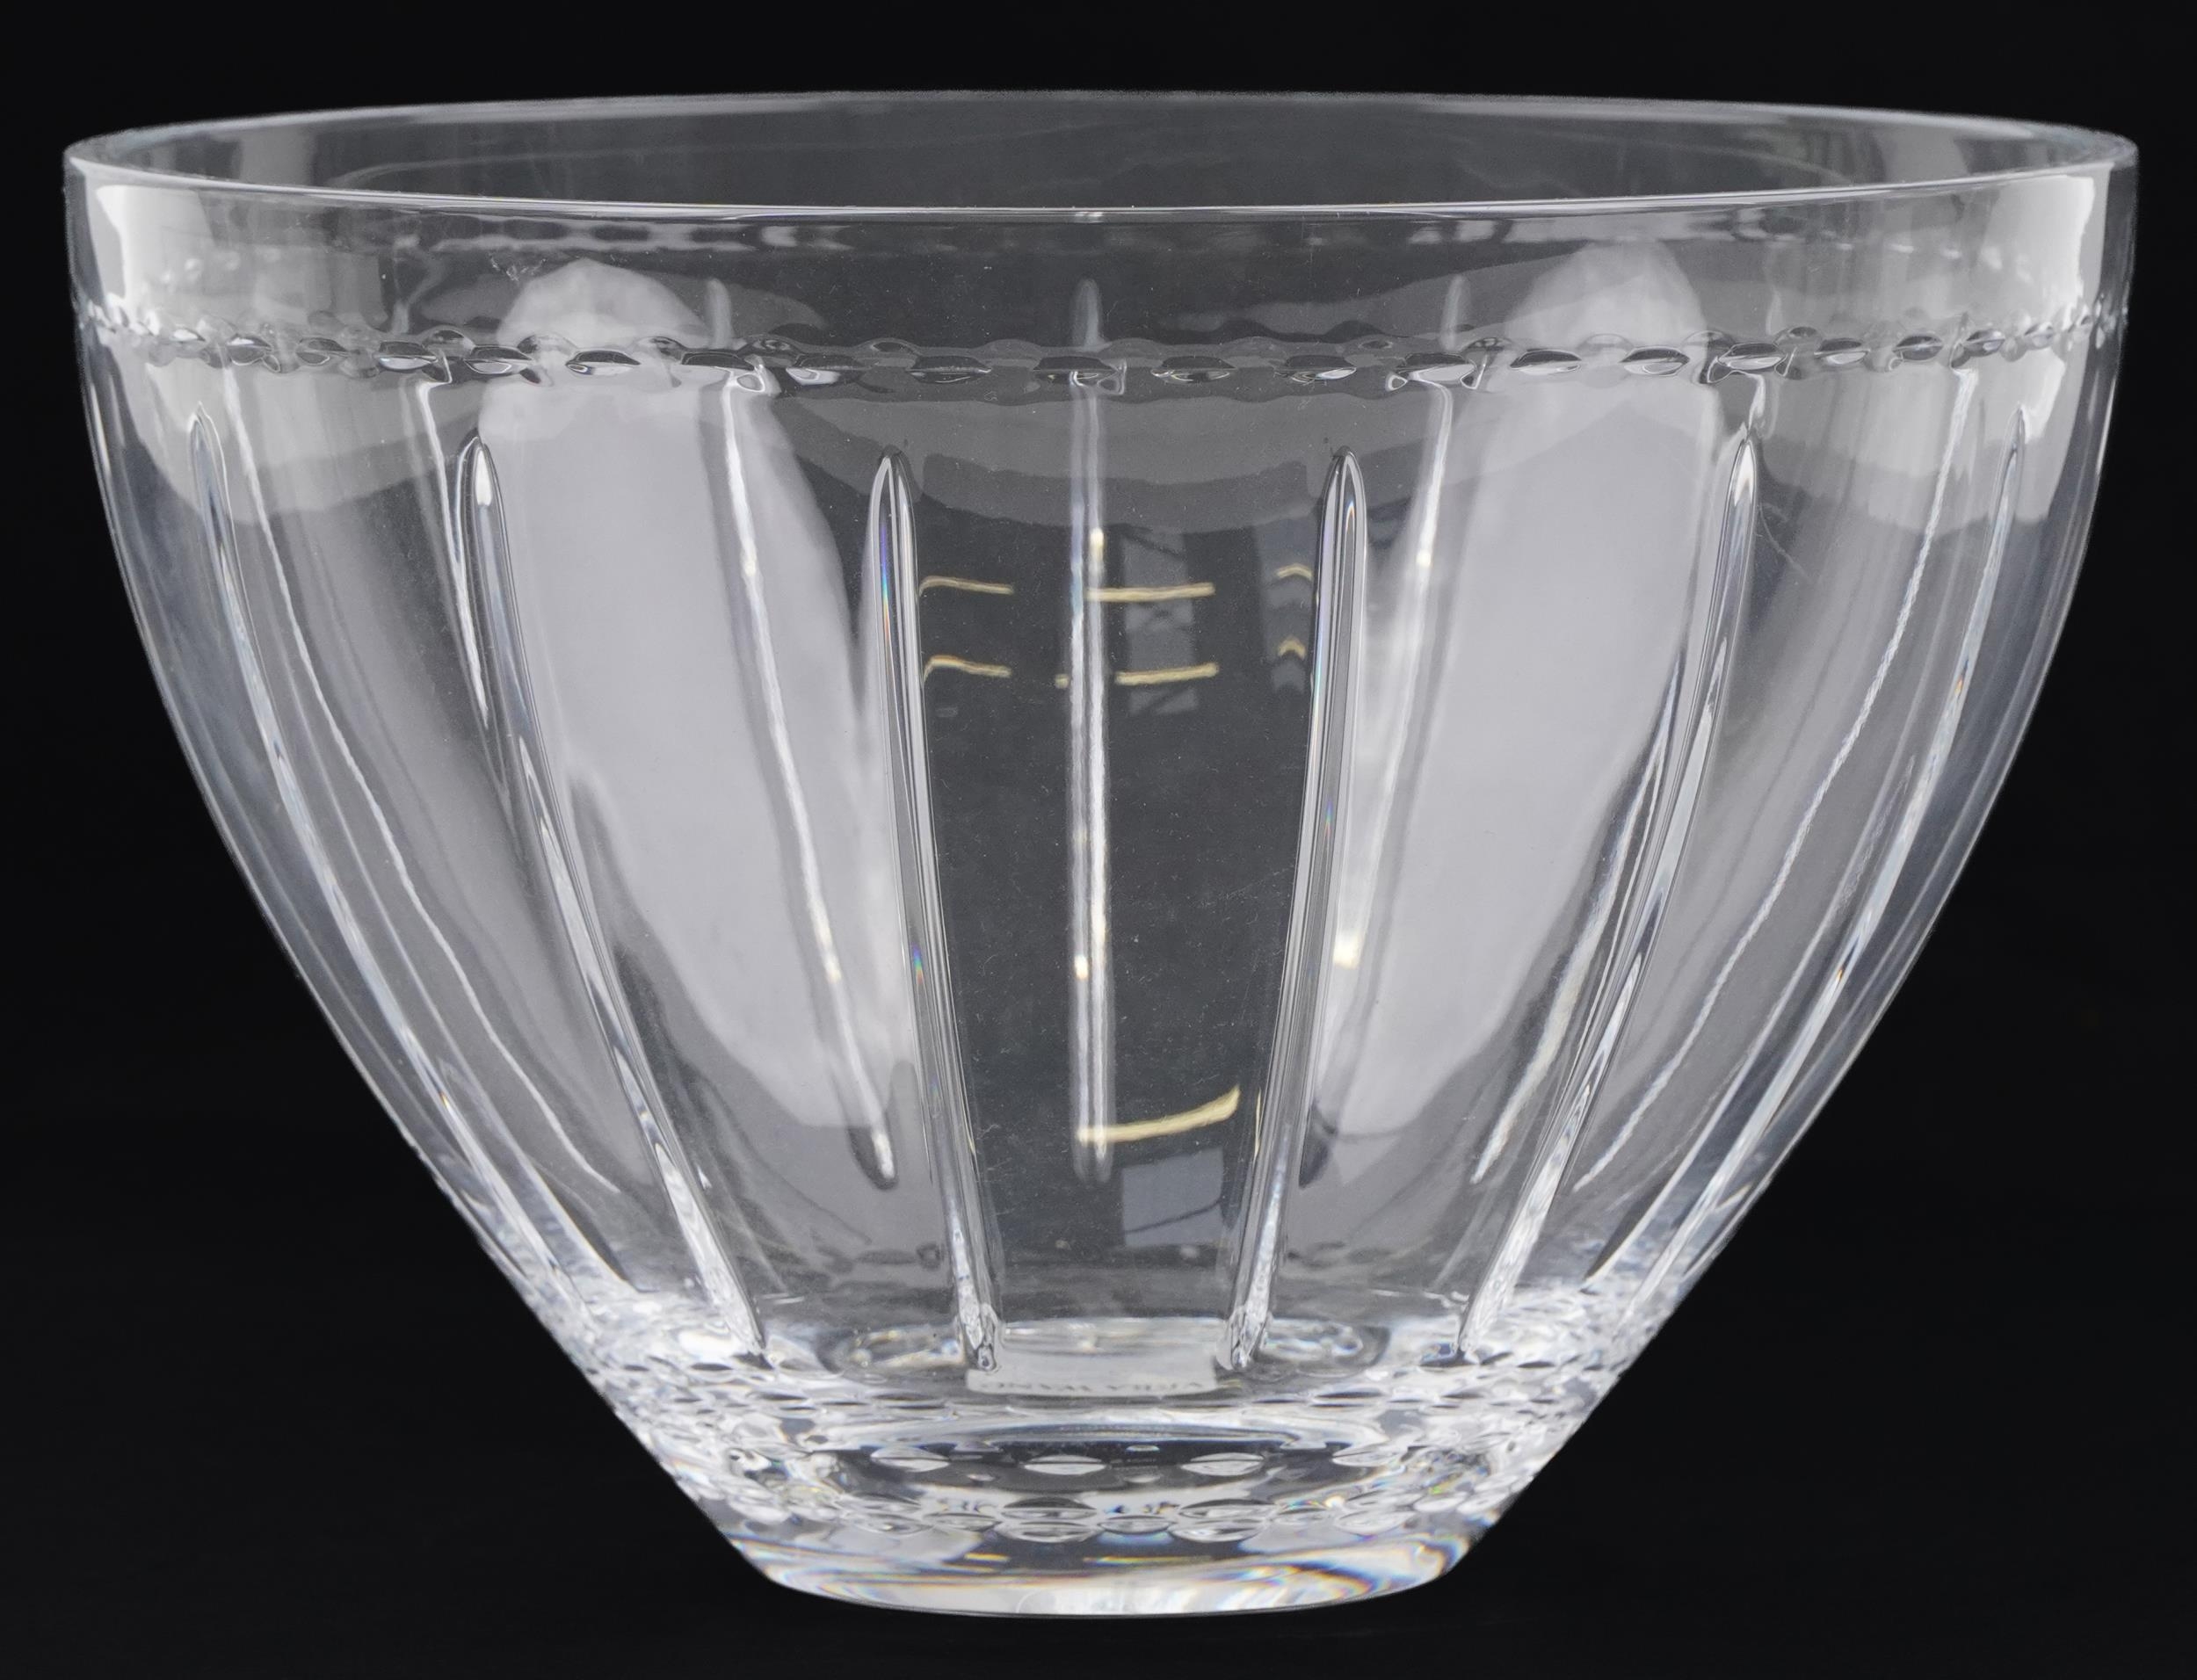 Wedgwood glass vase designed by Vera Wang, 17.5cm high - Image 2 of 4